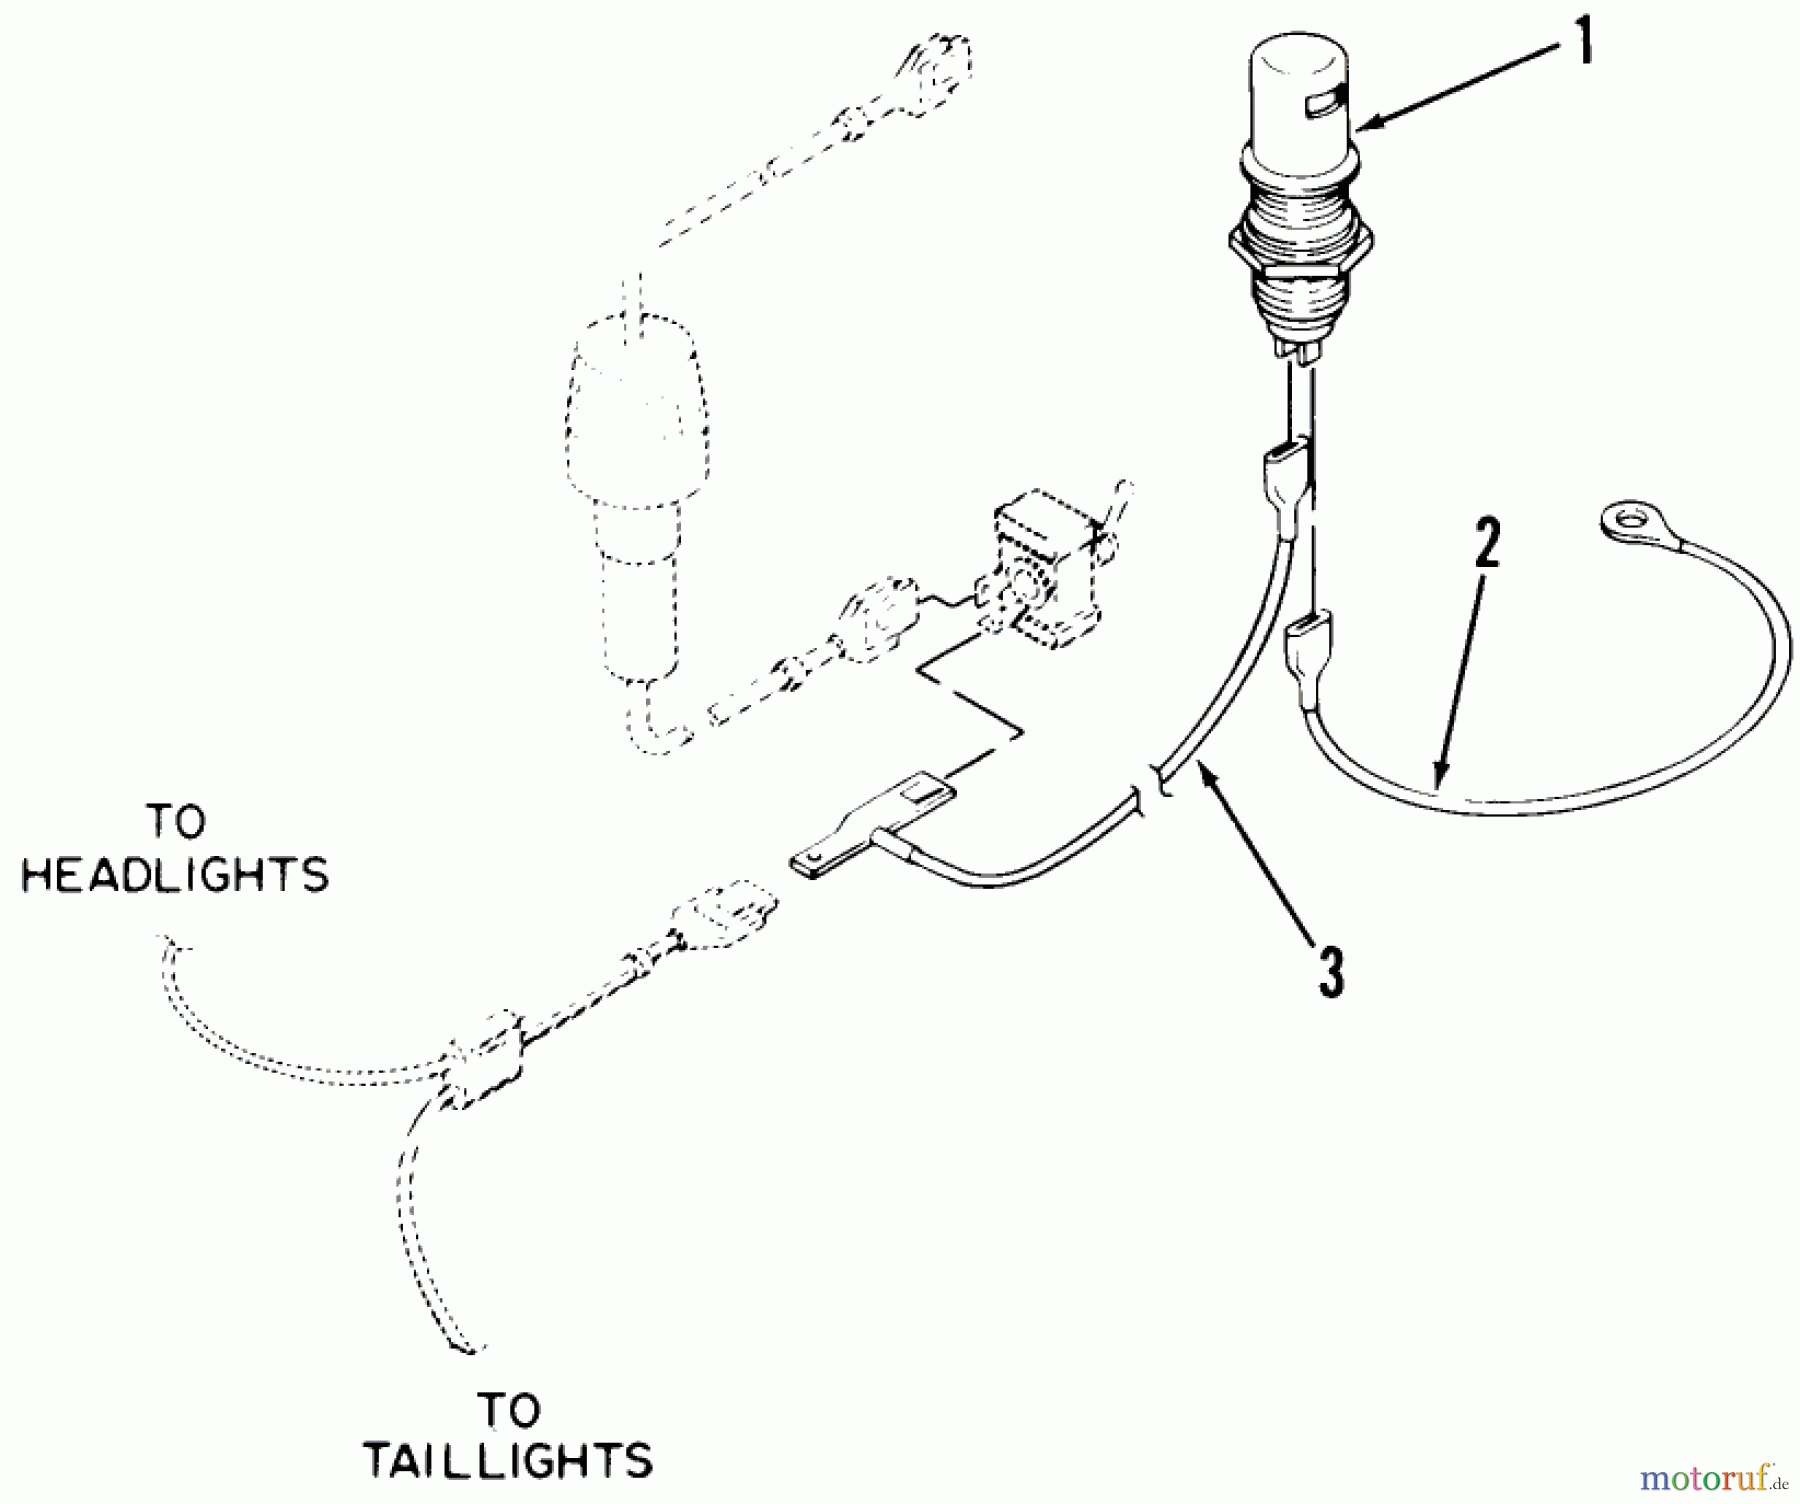  Toro Neu Accessories, Mower 80825 - Toro Dash Light, 1981 PARTS LIST FOR INSTRUMENT LIGHT FACTORY ORDER NUMBER 8-0825